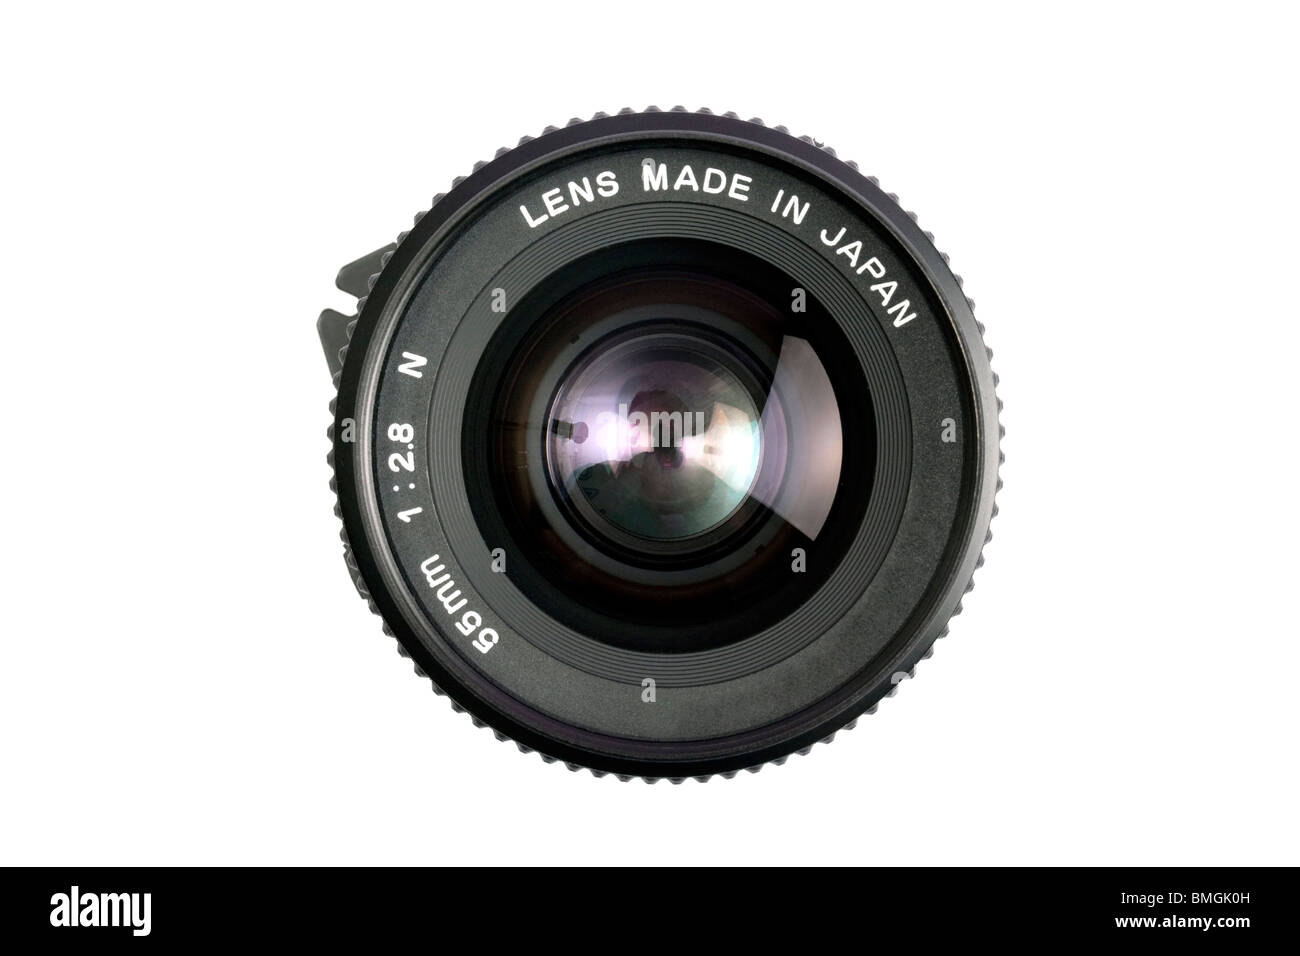 Kamera linse -Fotos und -Bildmaterial in hoher Auflösung – Alamy